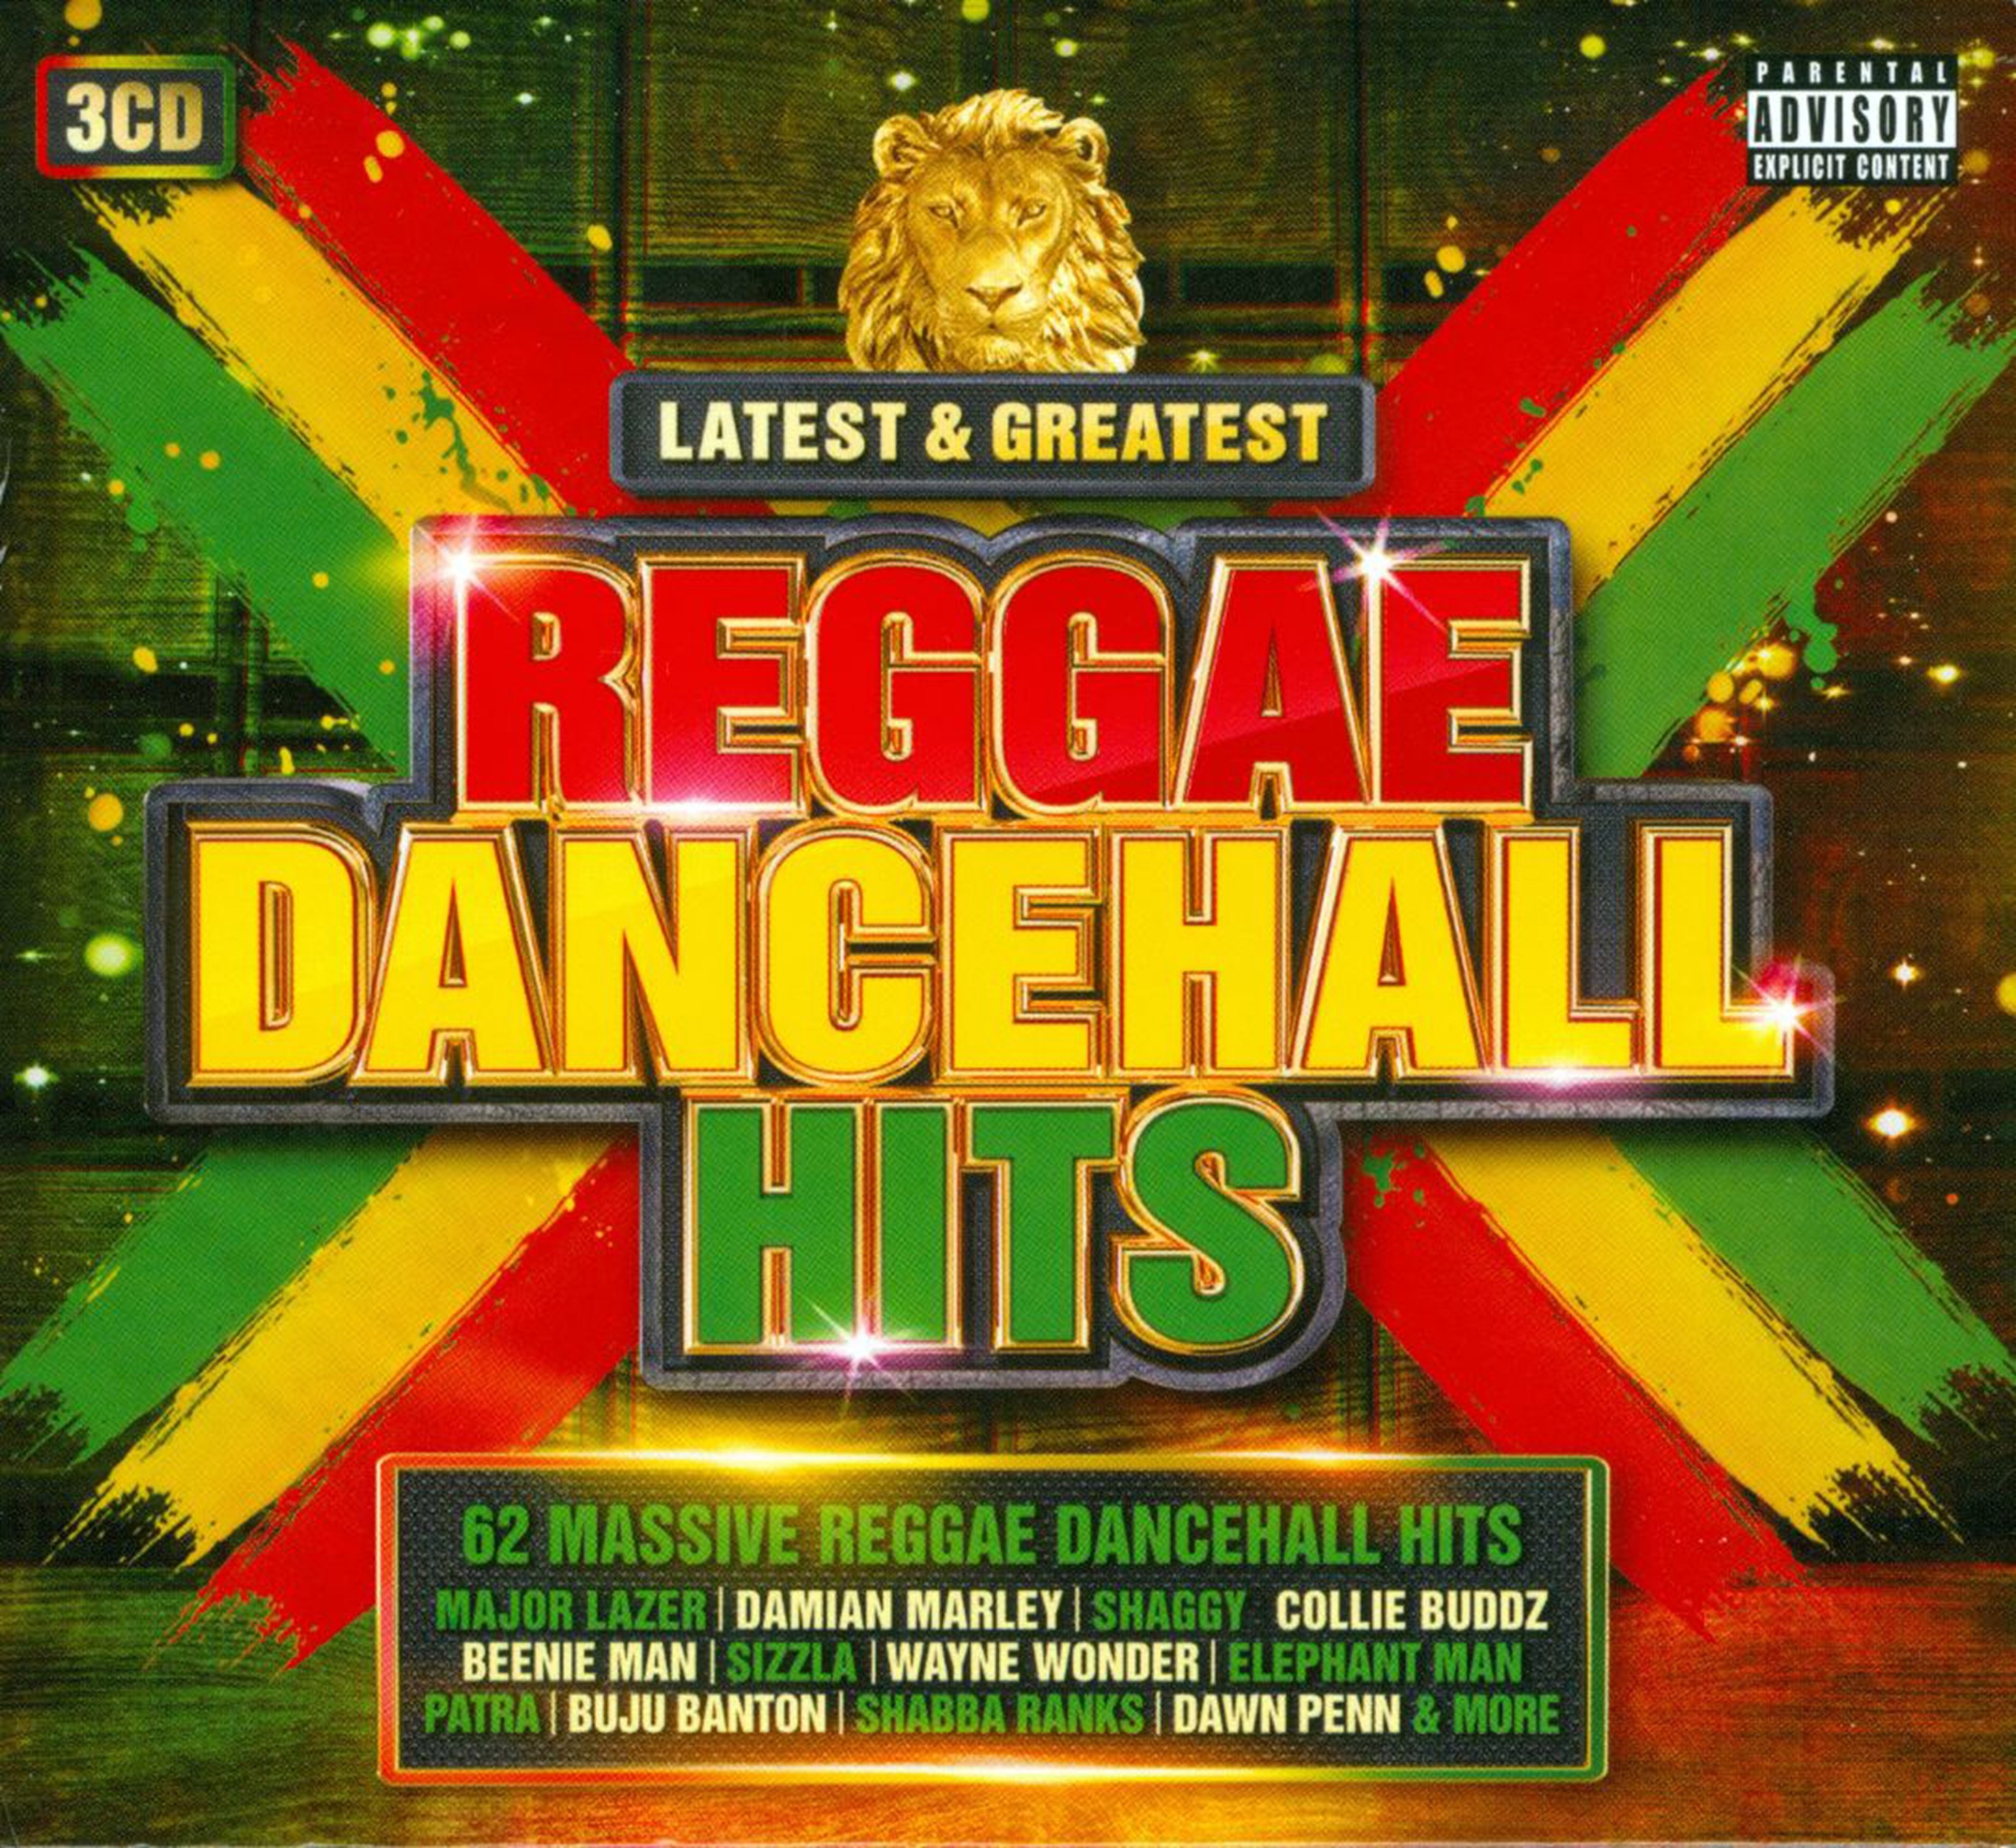 Latest & Greatest Reggae Dancehall Hits CD Box Set Free shipping